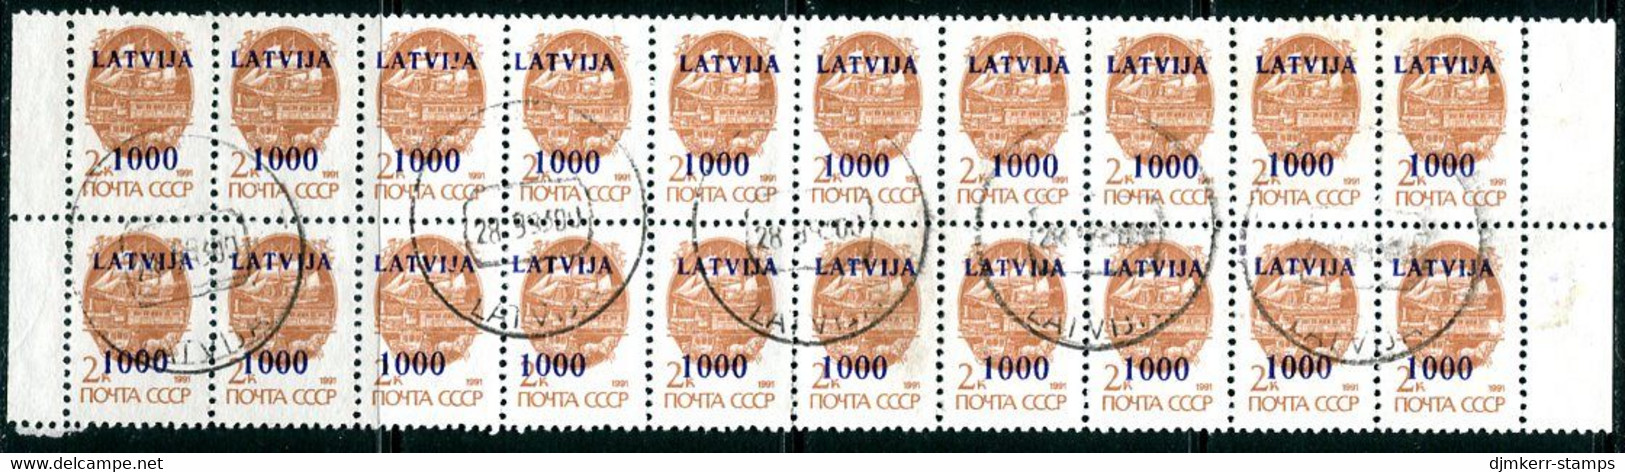 LATVIA 1991 Provisional Surcharges I 1000 K. Block Of 20 Used.  Michel 316 - Letonia